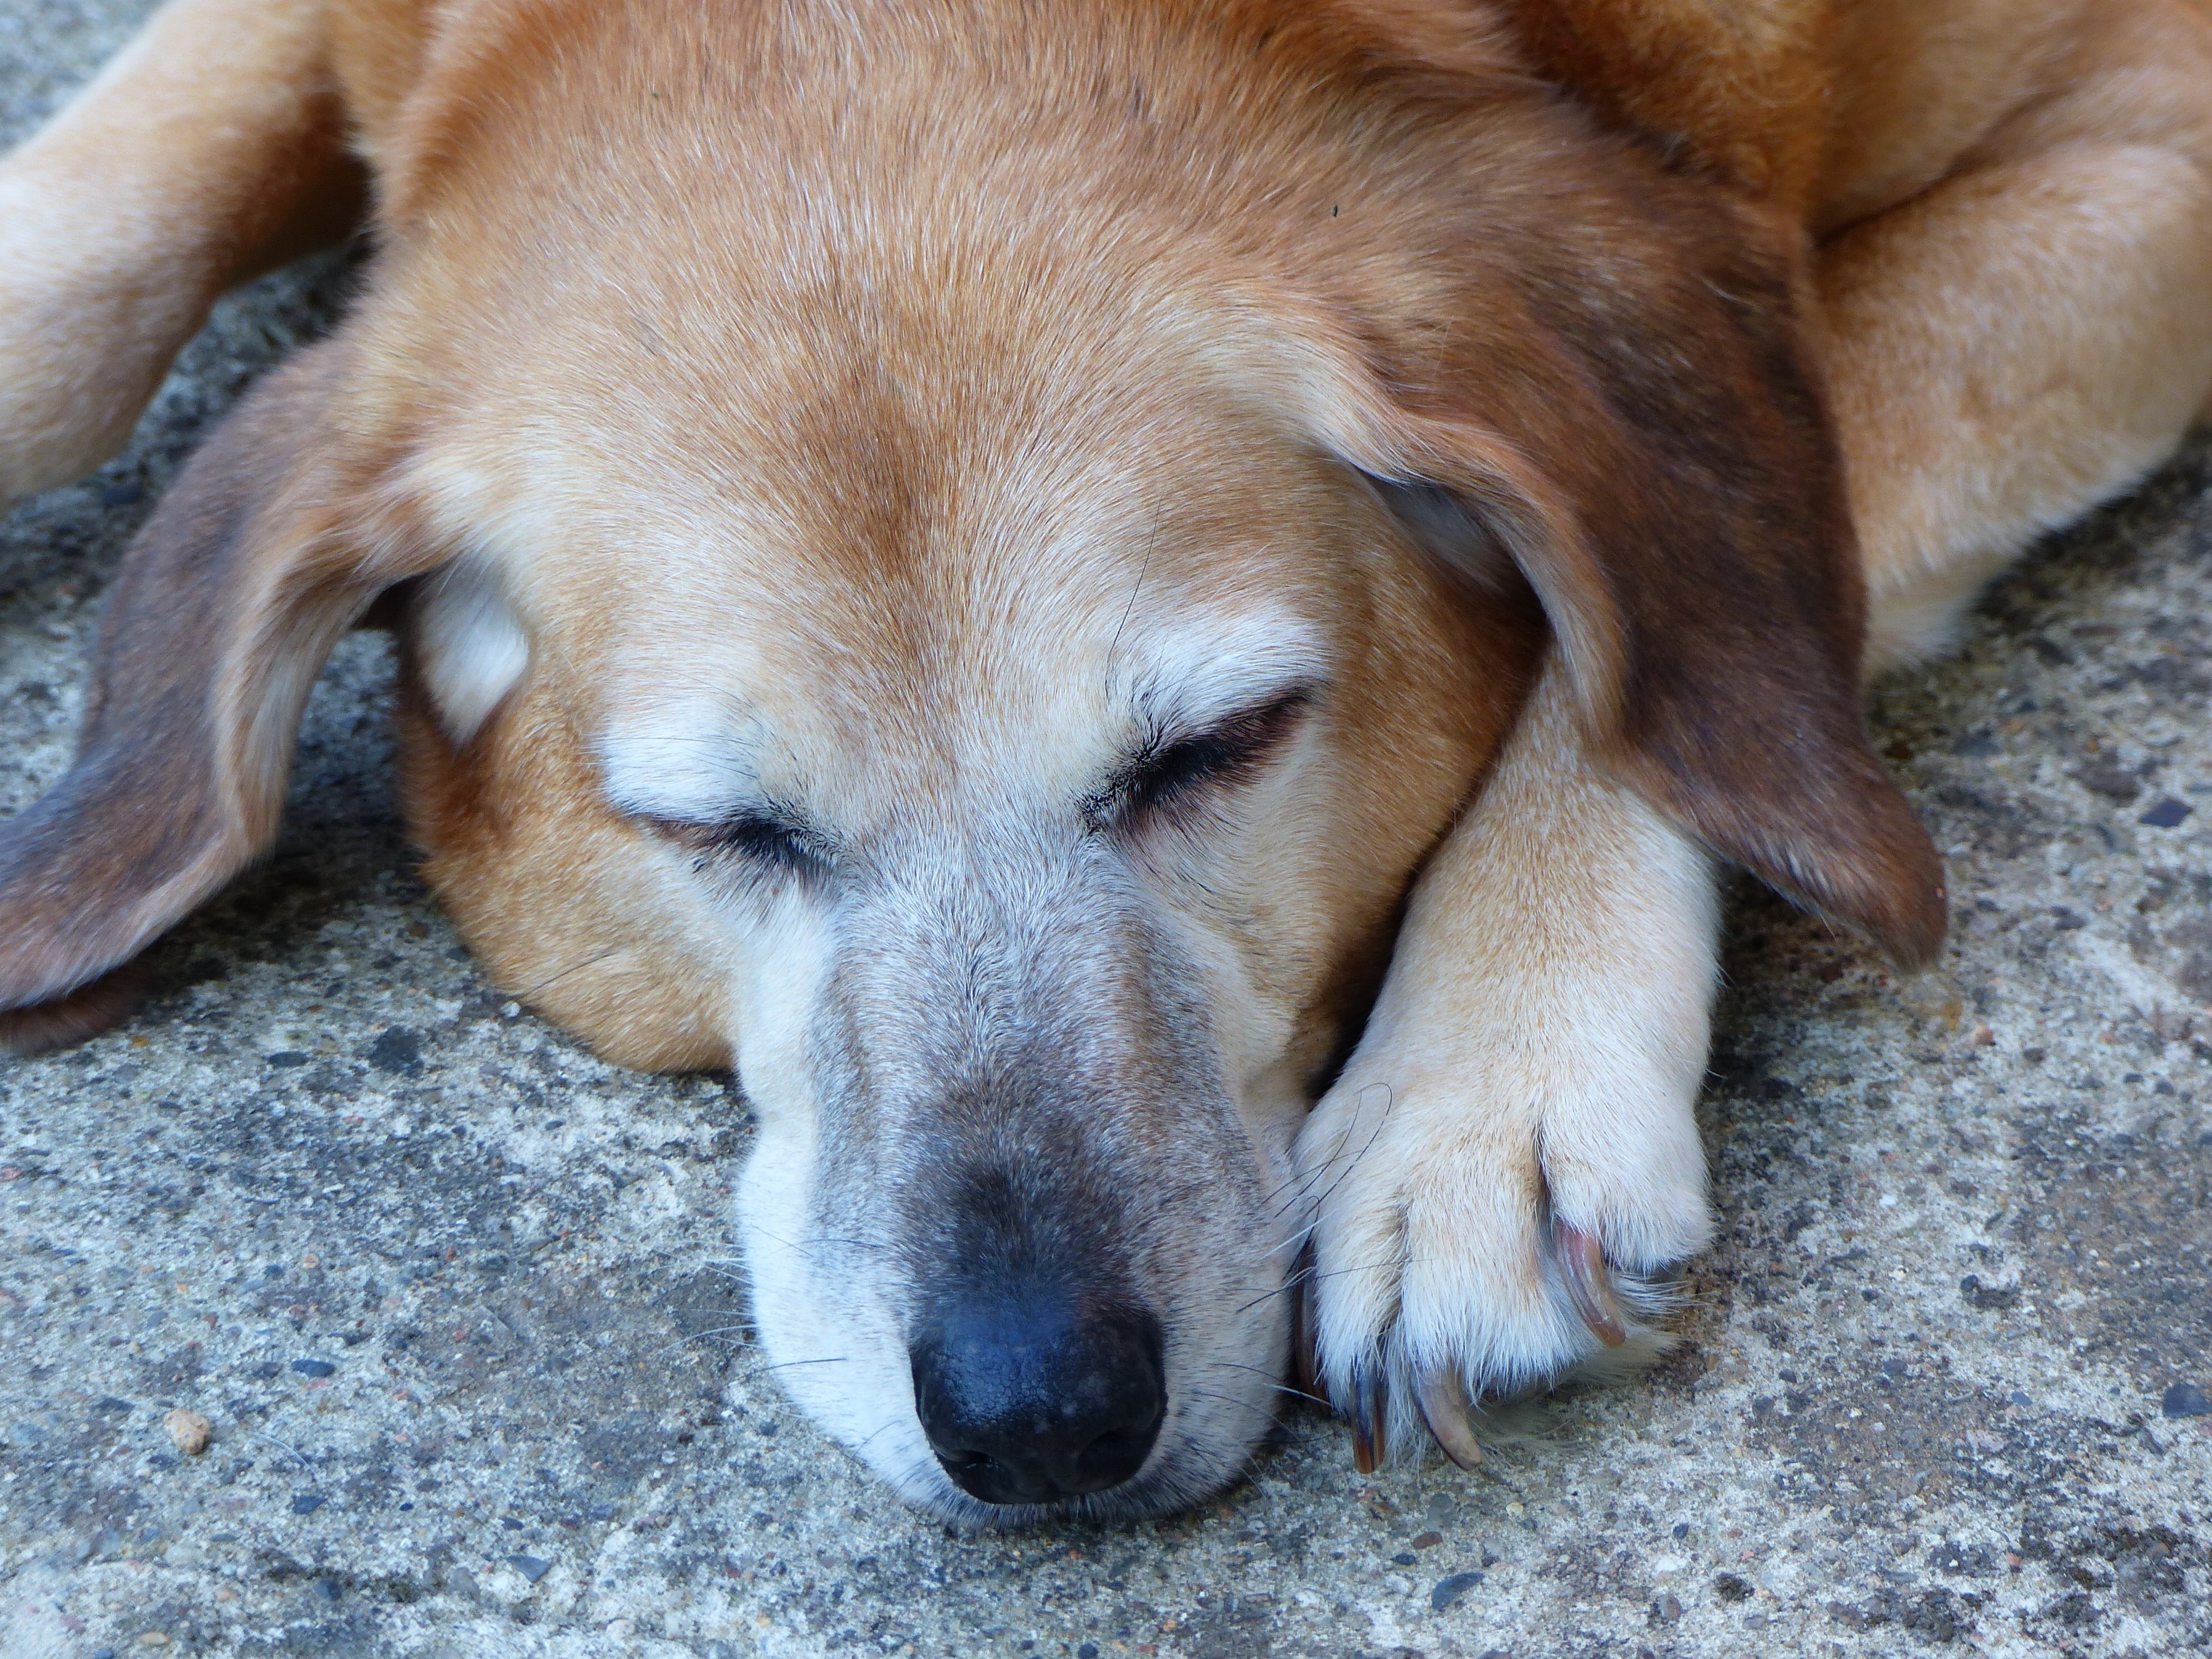 tan and white short coated dog sleeping on gray floor